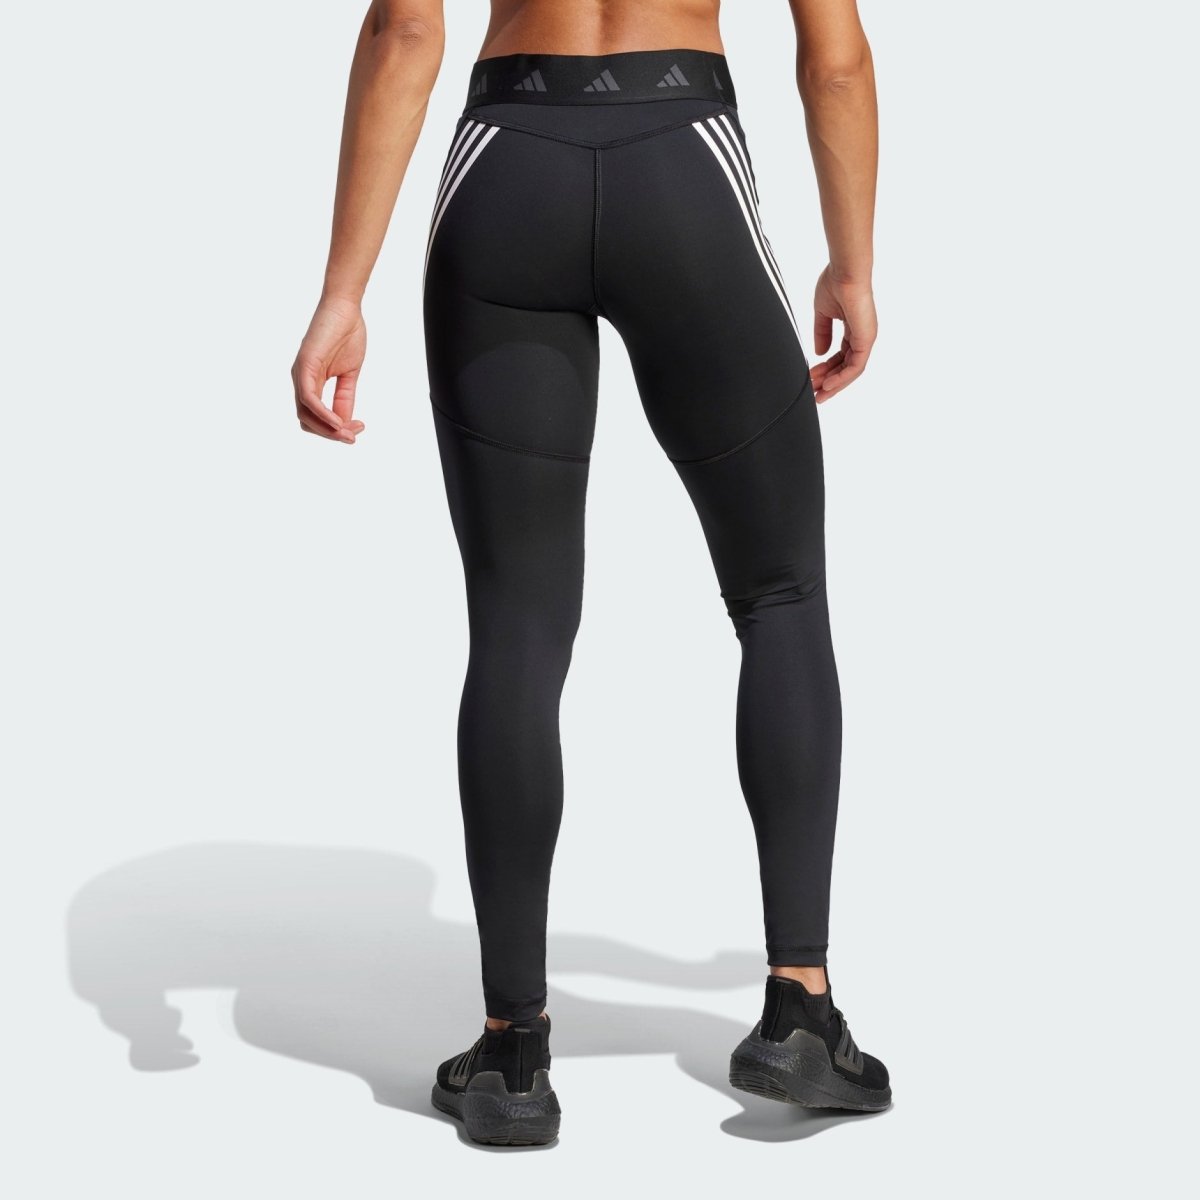 Buy Adidas women tight fit training leggings black indigo Online